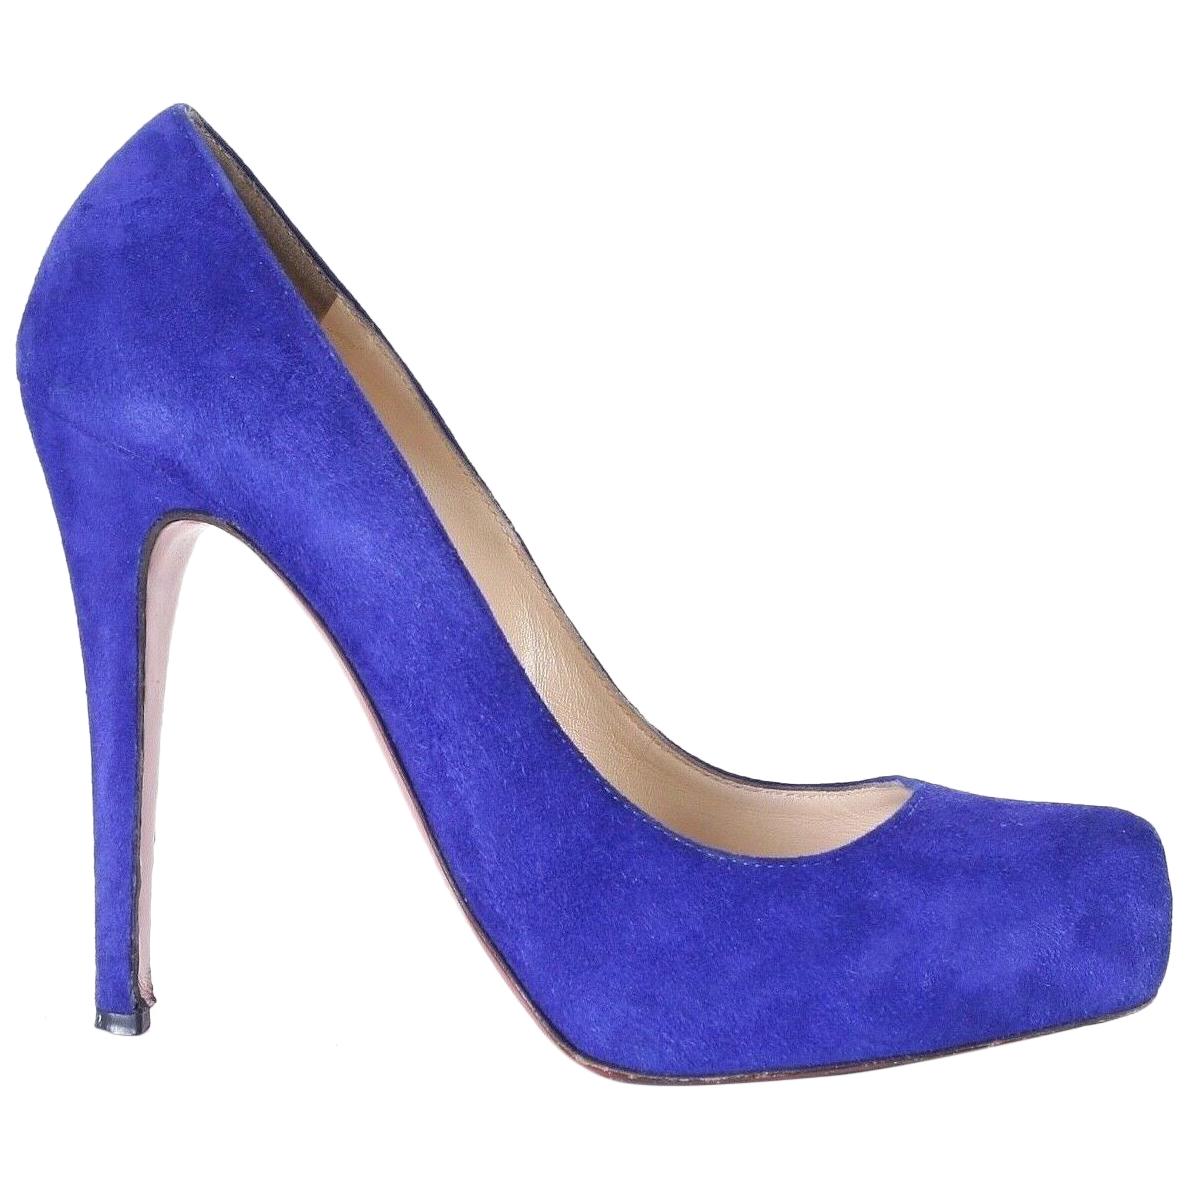 CHRISTIAN LOUBOUTIN Rolando blue suede leather pointy heels pumps EU38.5 US8.5